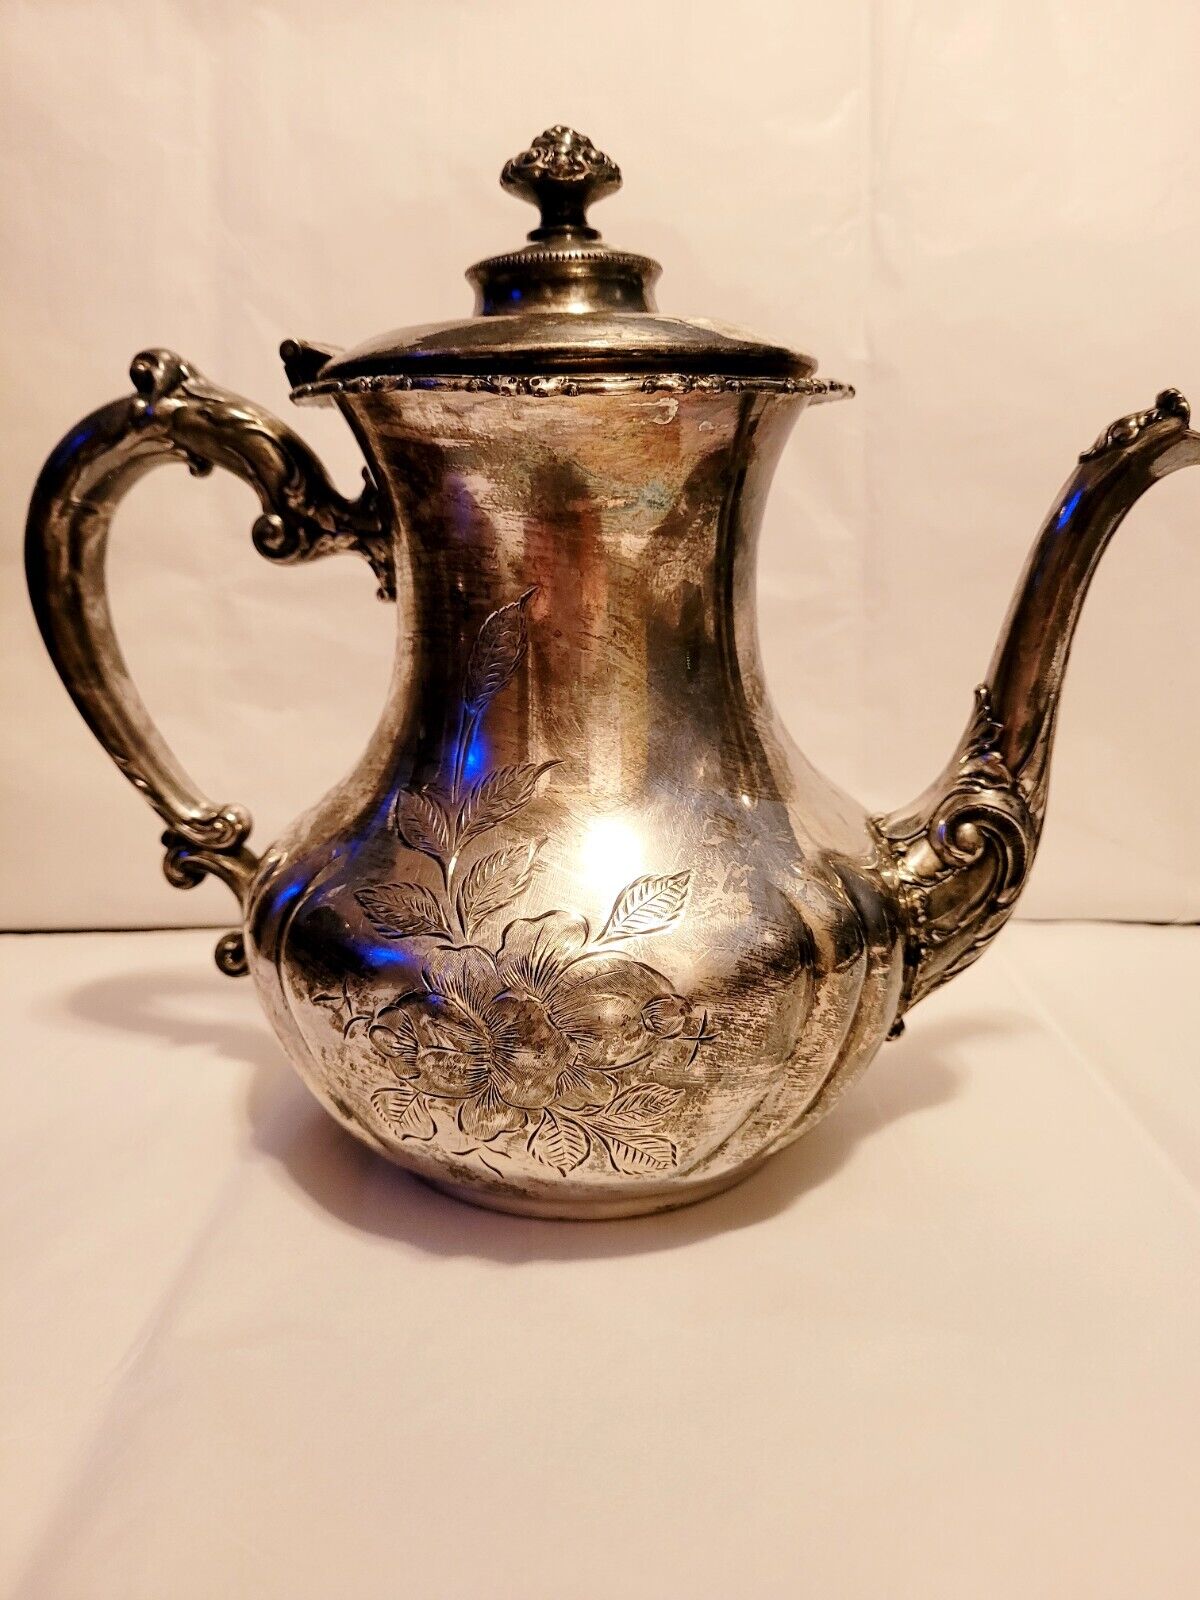 The Monarch Silver CO teapot